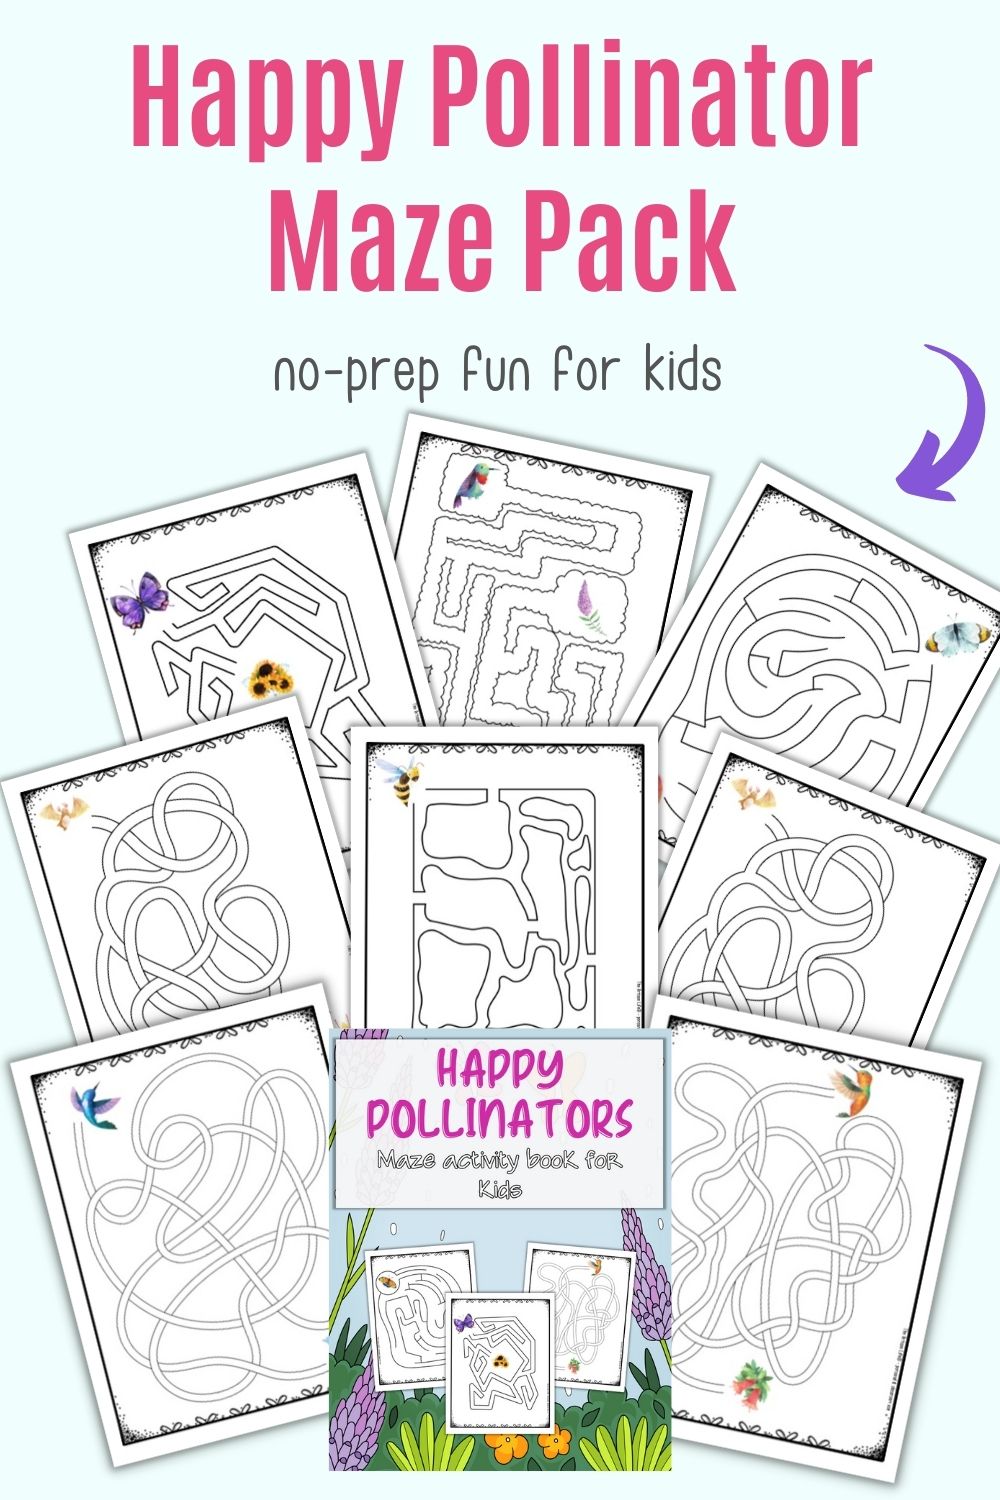 Text "happy pollinator maze pack - no-prep fun for kids"